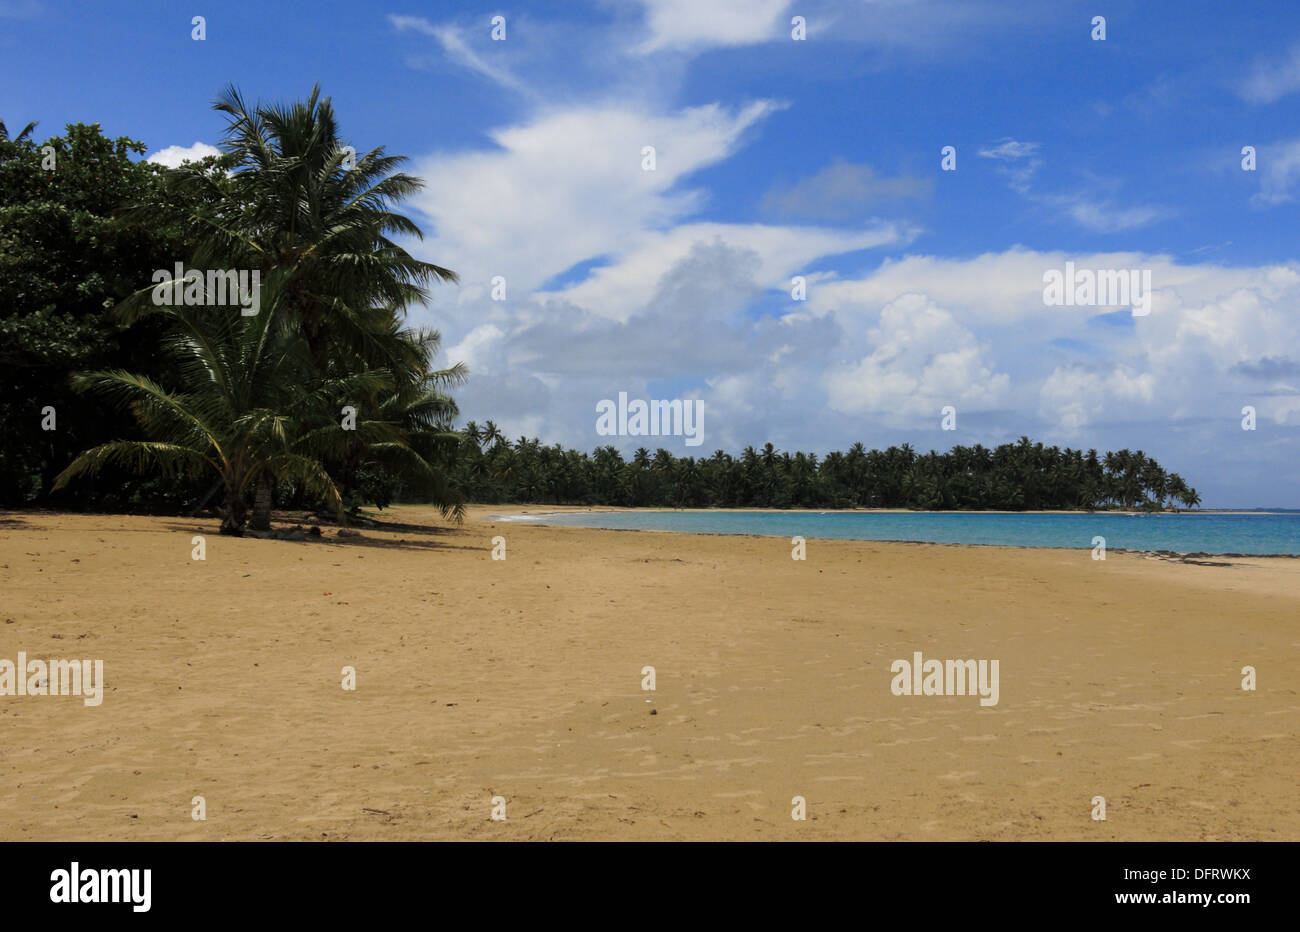 Tropical Beach and Ocean View Postcard Image, Samana area, Dominican Republic, September 2013 Stock Photo